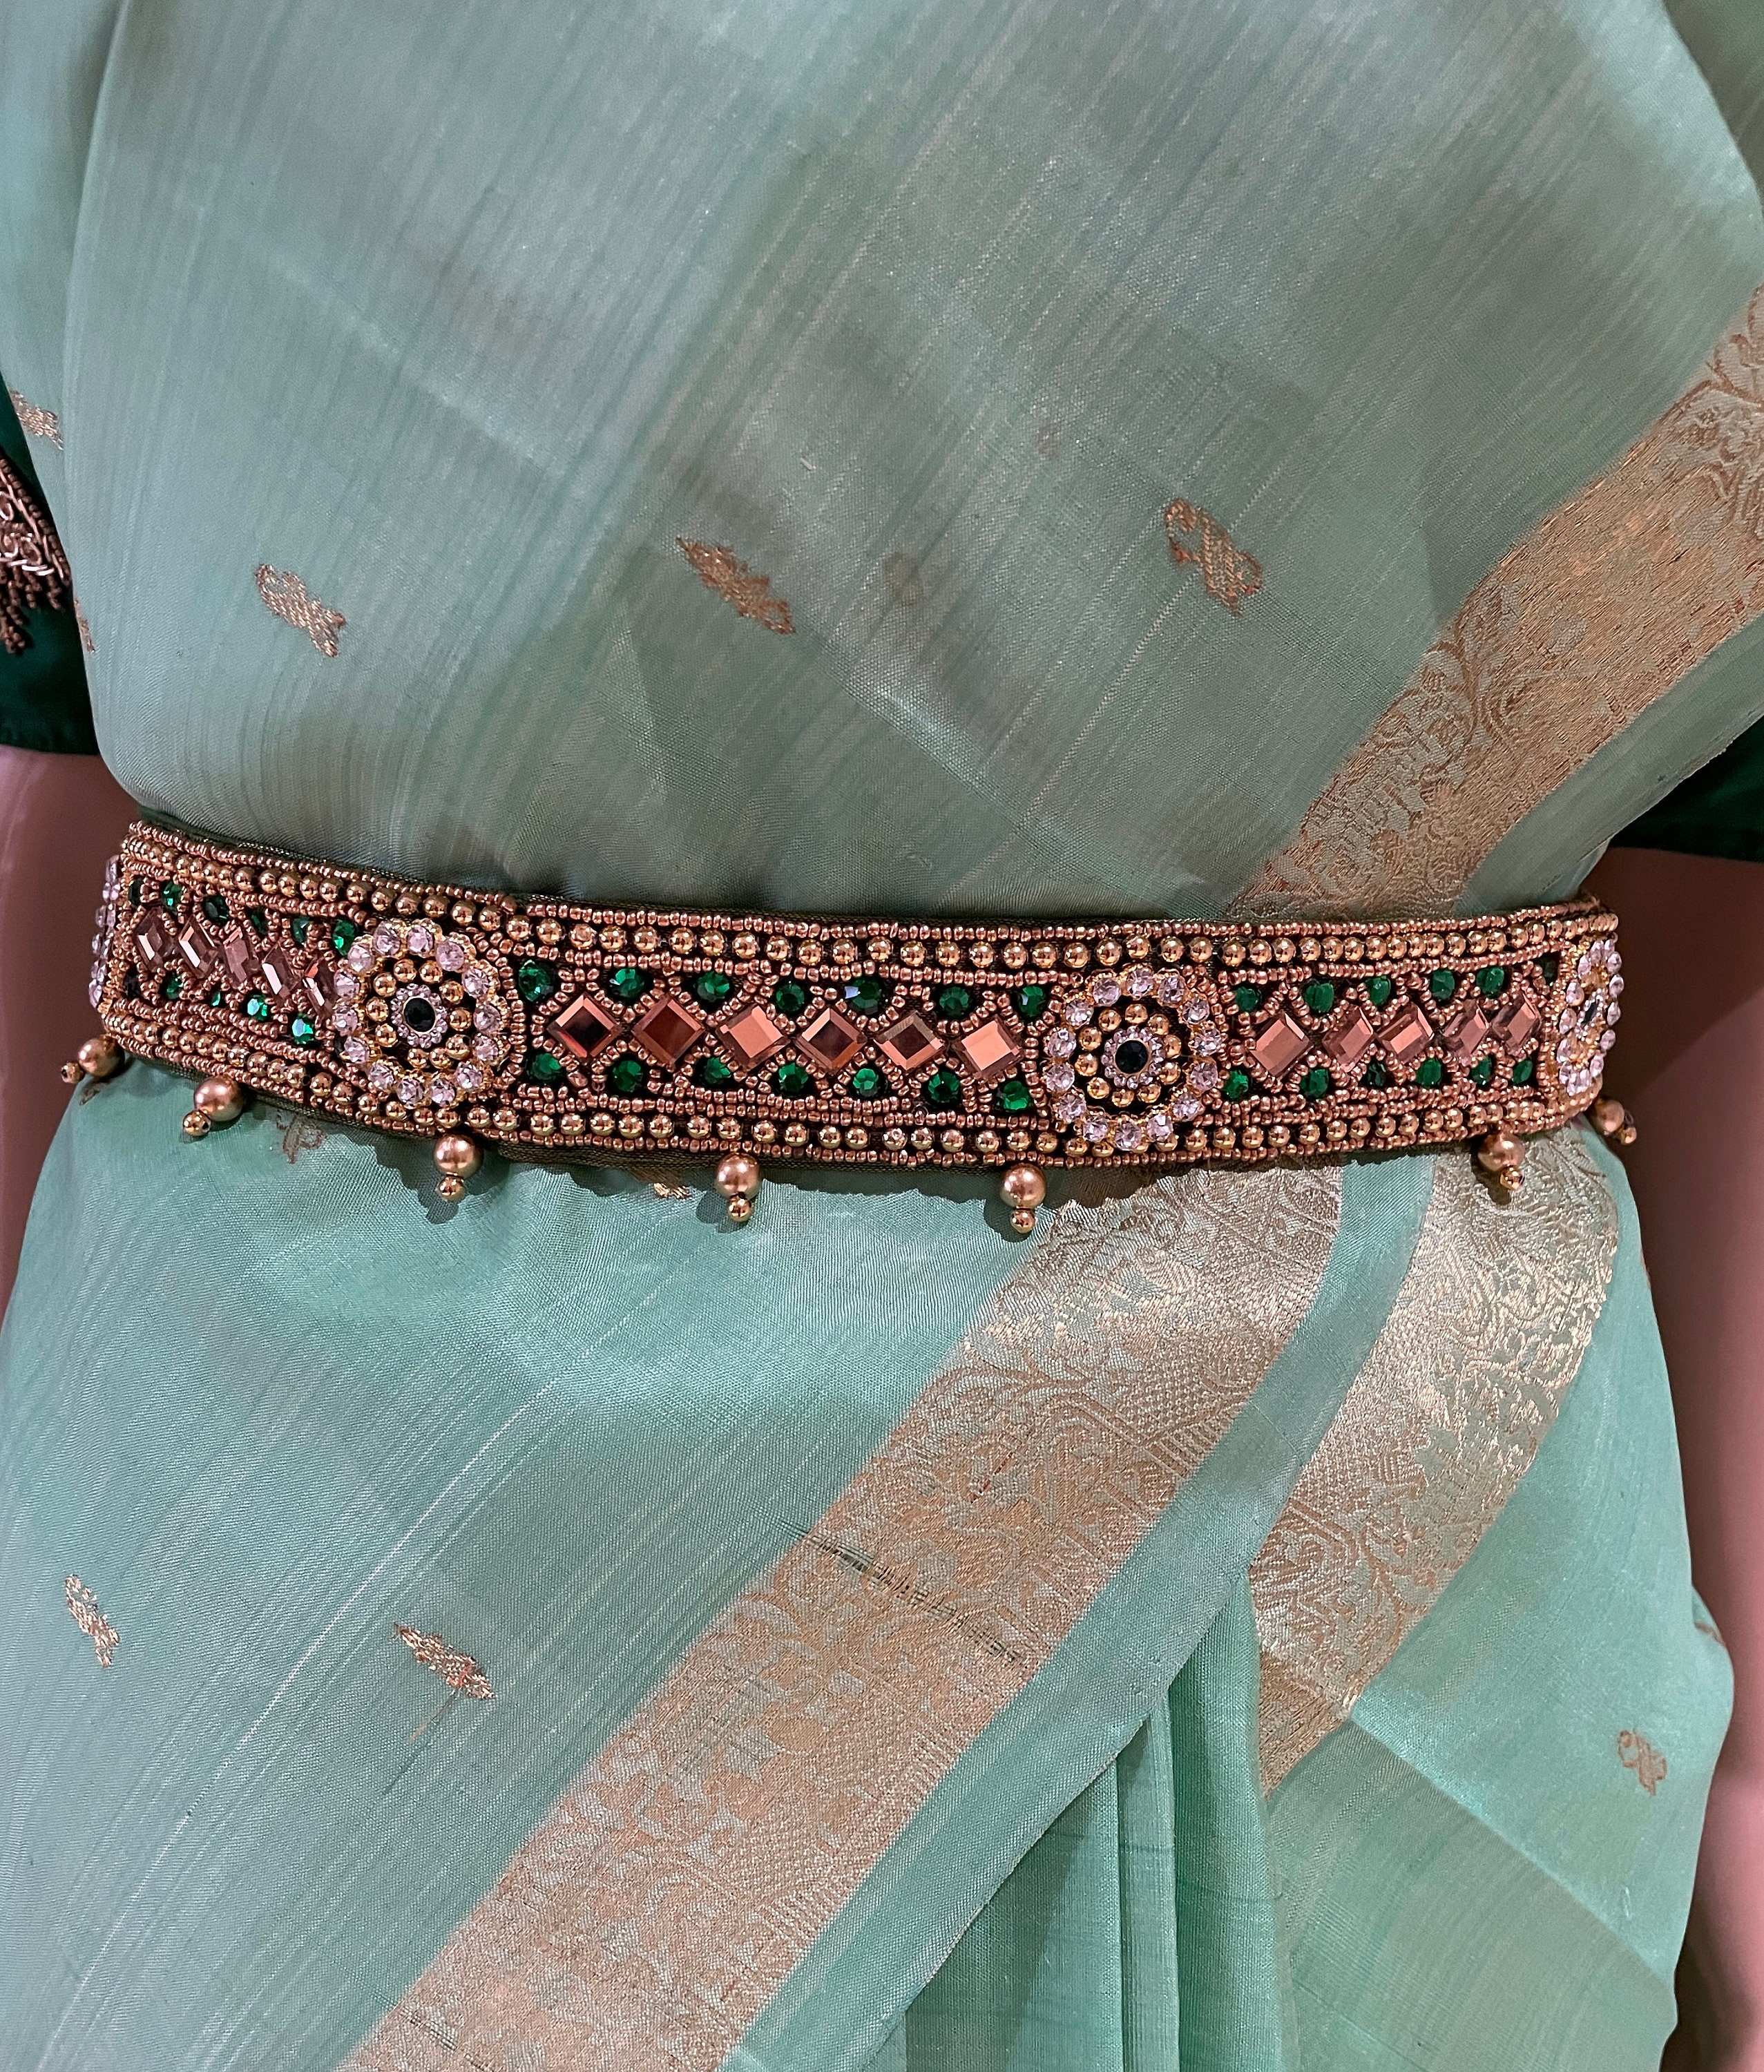 SAREE Belt Return Gift-adults/waist Belt/ Hip Belts/maggam Work Belt/embroidered  Hip Belt/indian Ethnic Gold/green and Gold/red 